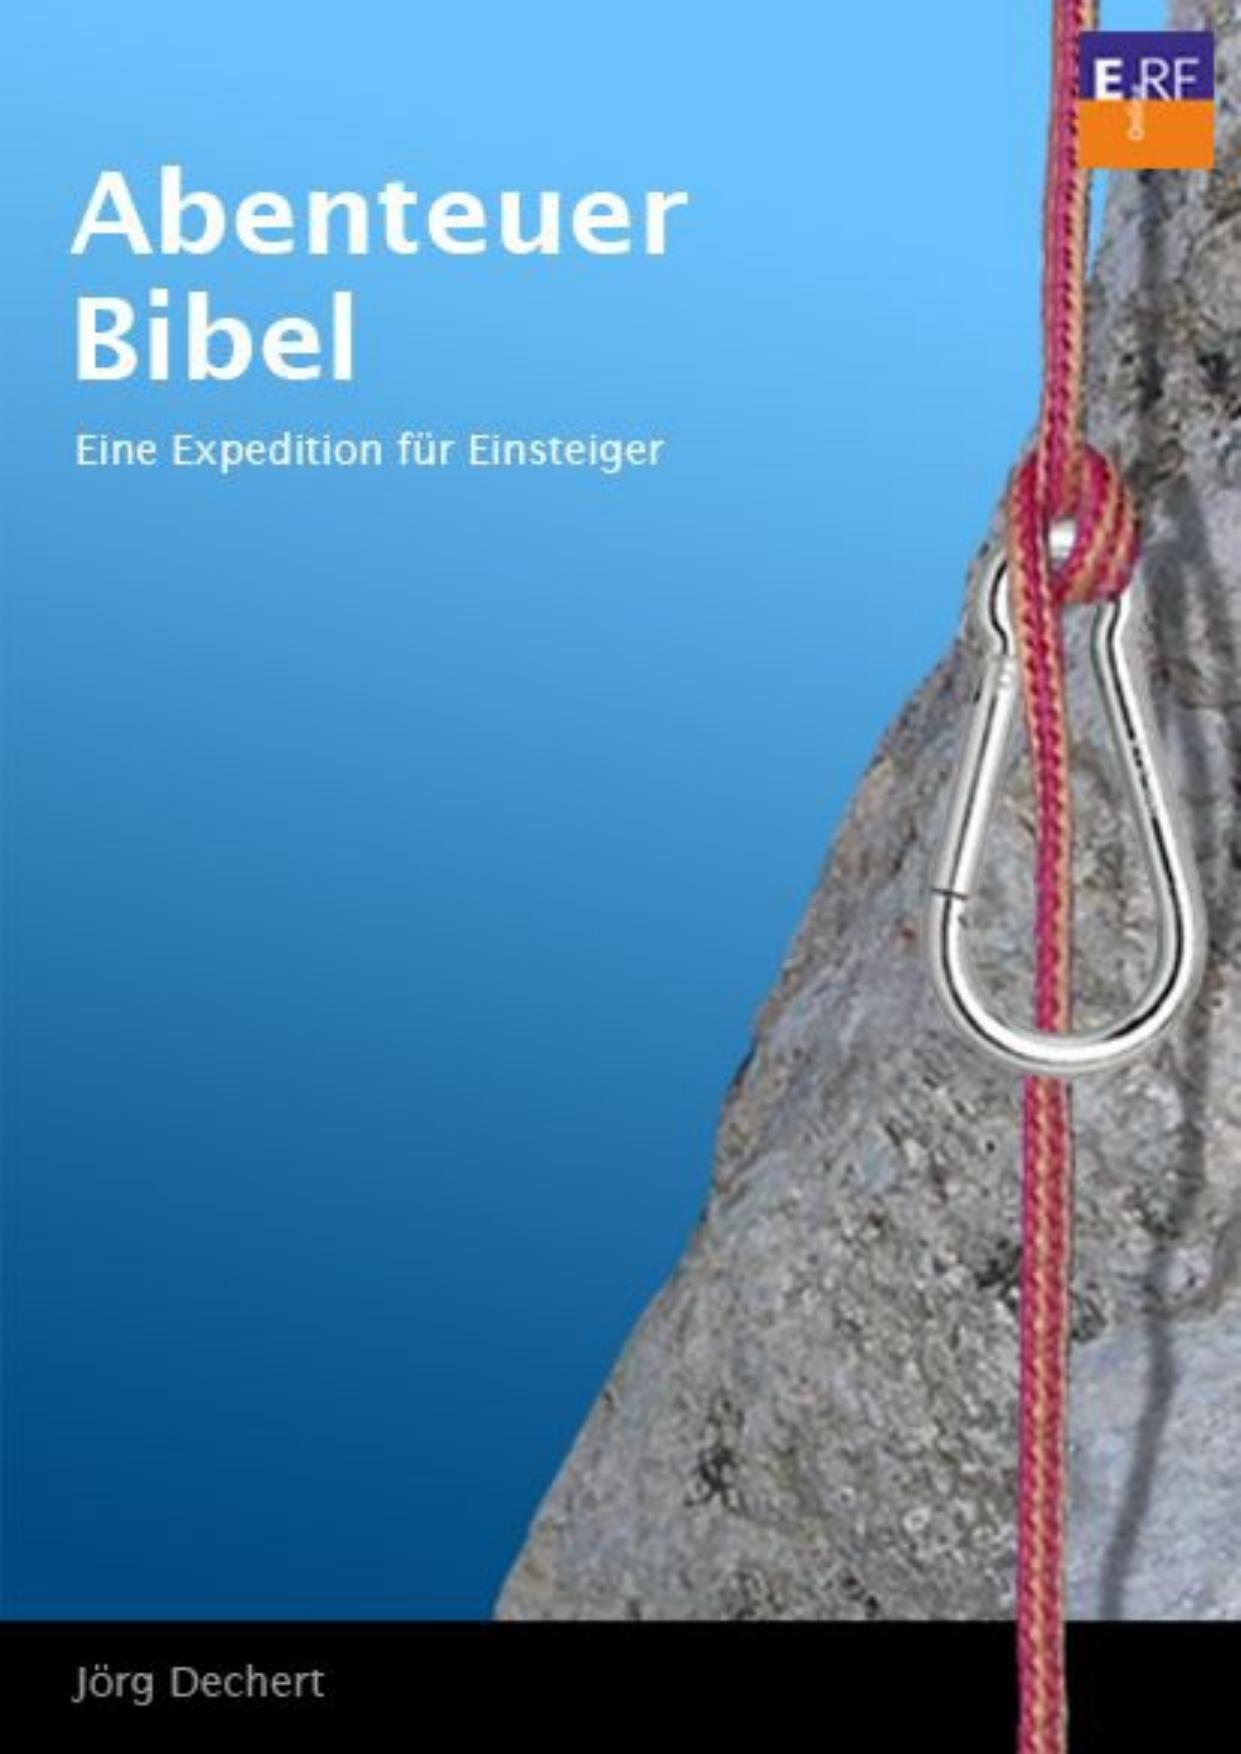 Abenteuer Bibel (German Edition)